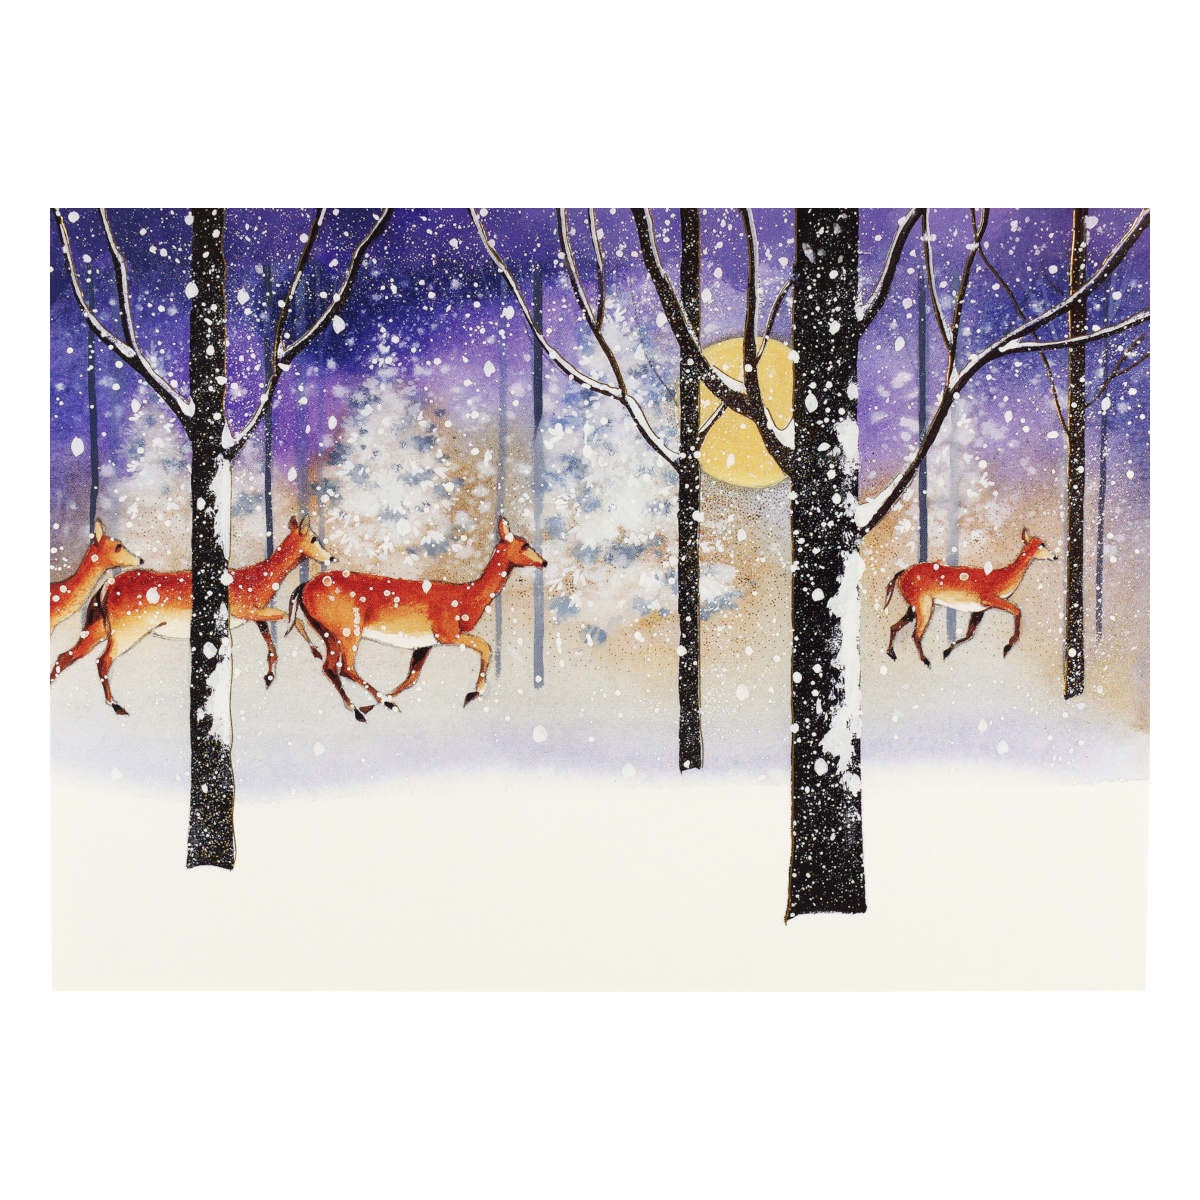 Deluxe Boxed Christmas Cards - Deer in Snowfall